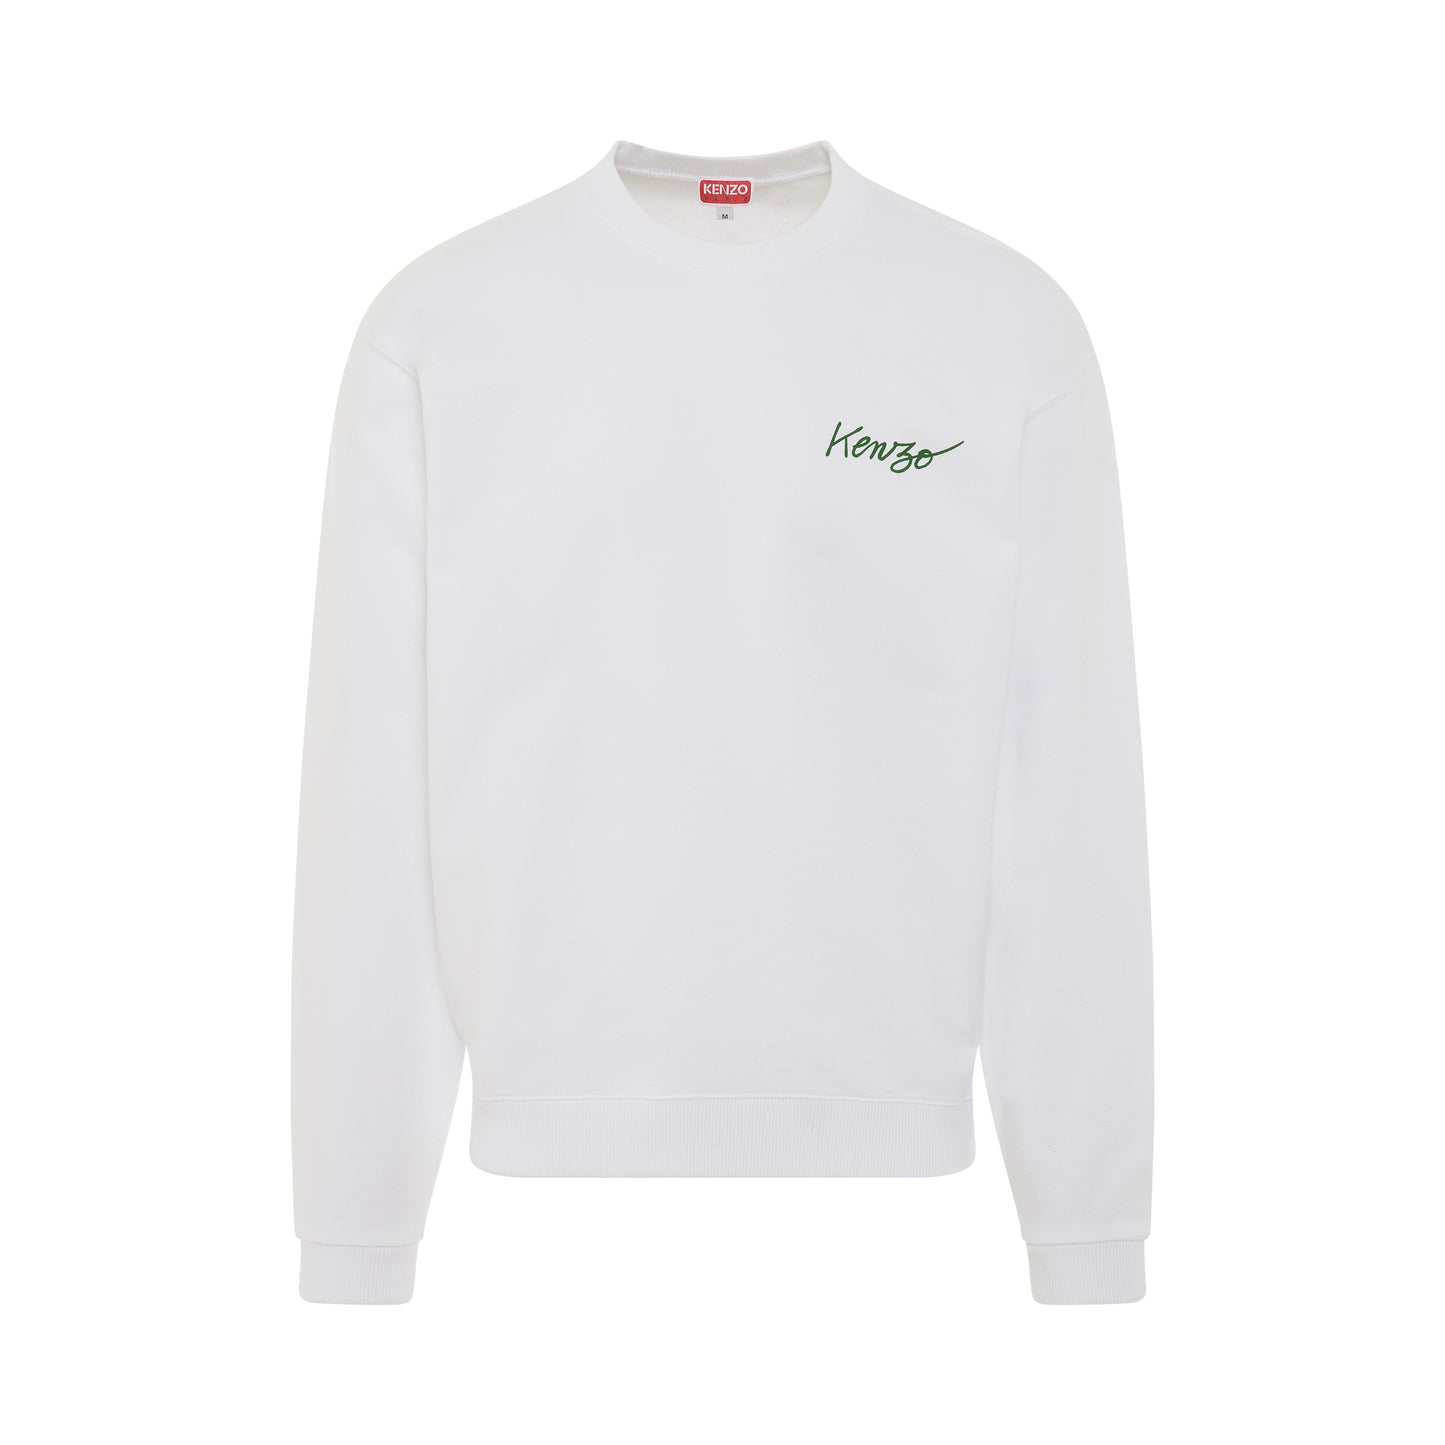 Poppy Print Sweatshirt in White